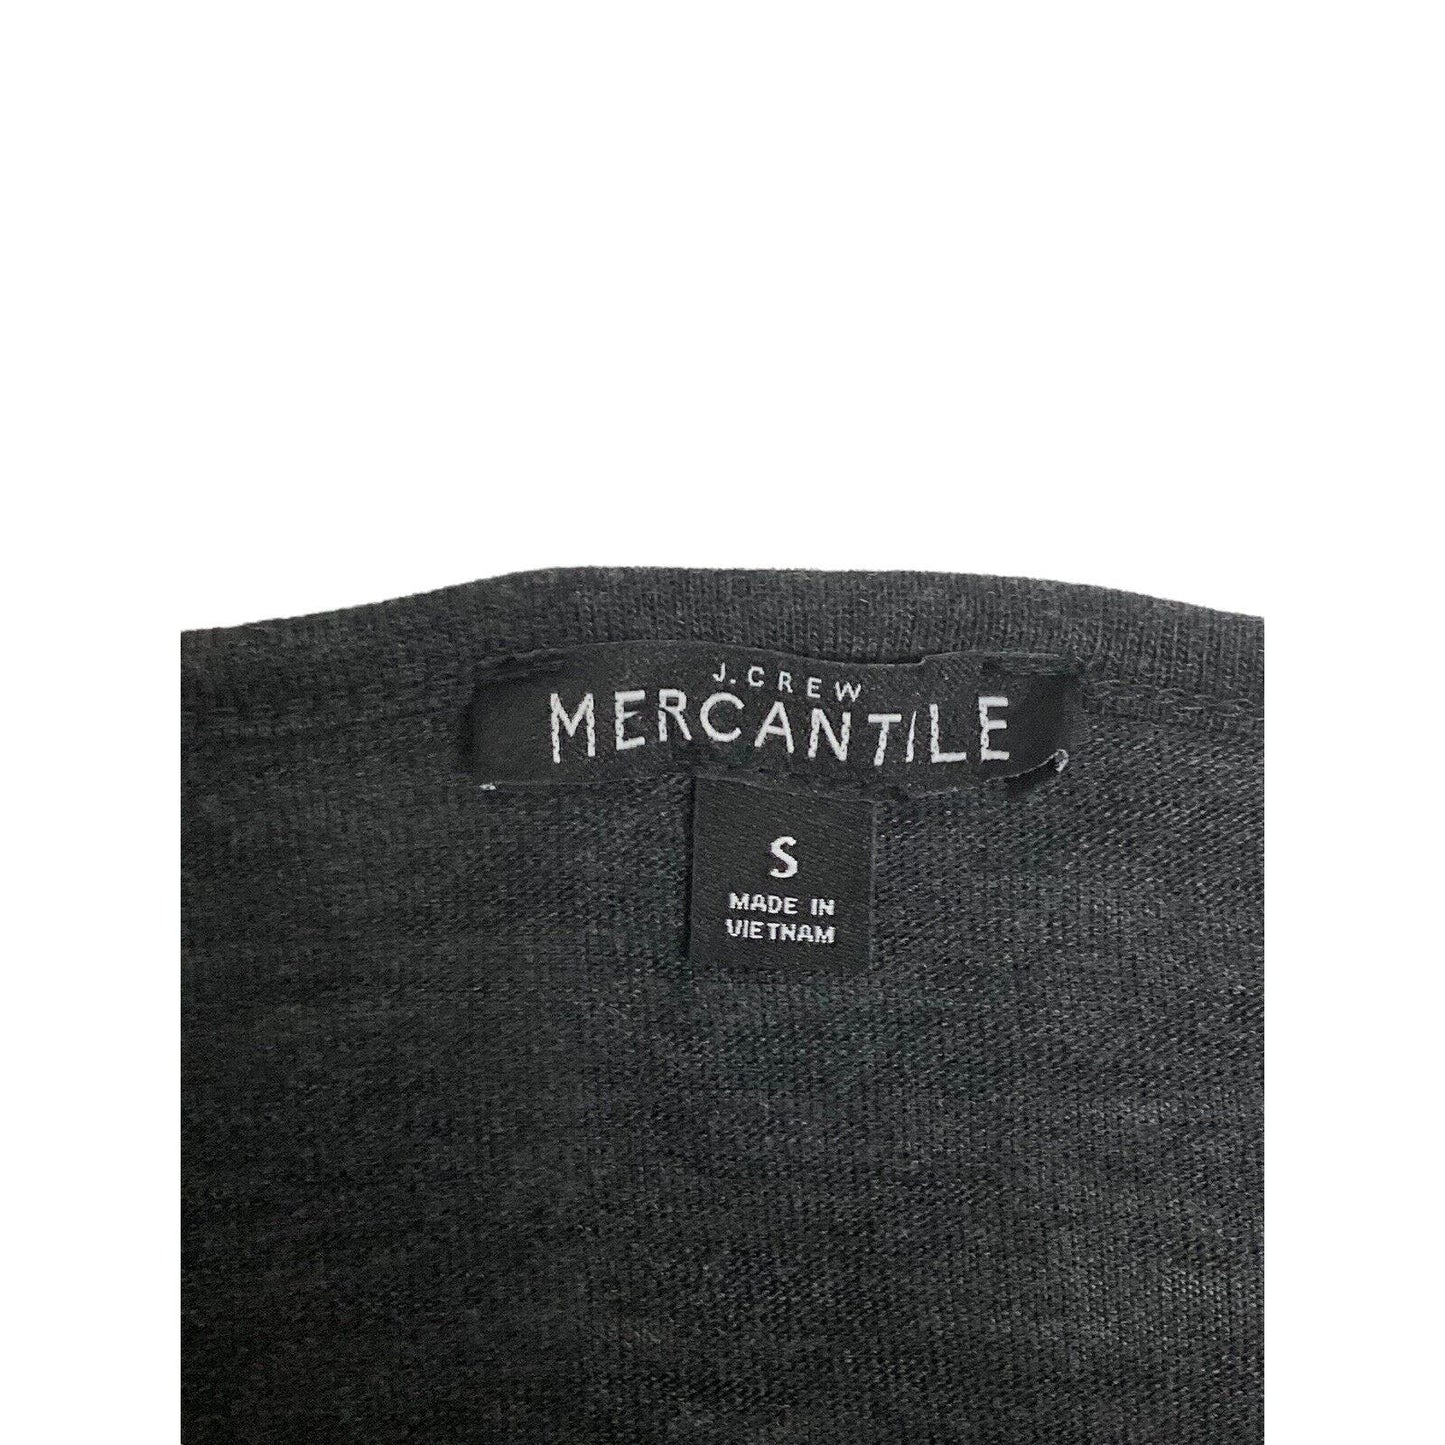 J Crew Mercantile Mixed Media Polka Dot Hem Long Sleeve Top Shirt Size Small